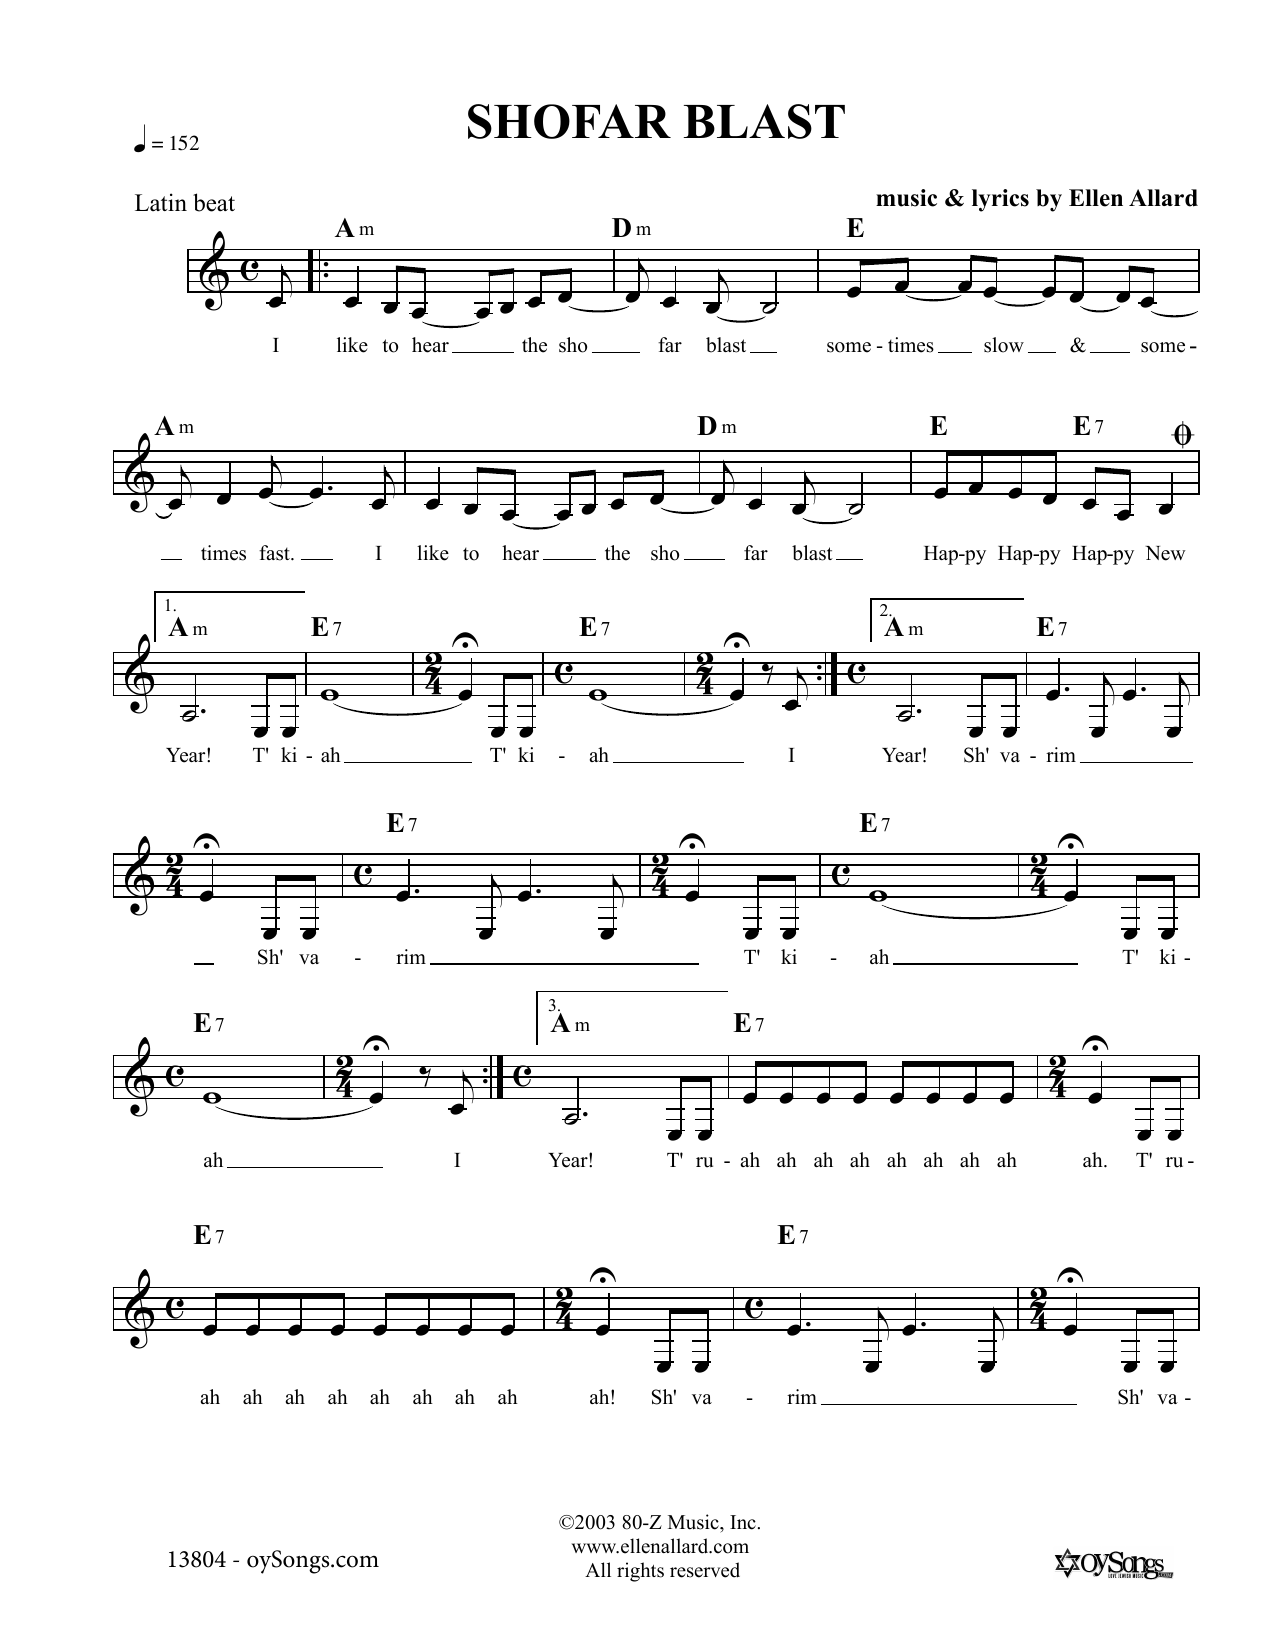 Download Ellen Allard Shofar Blast Sheet Music and learn how to play Melody Line, Lyrics & Chords PDF digital score in minutes